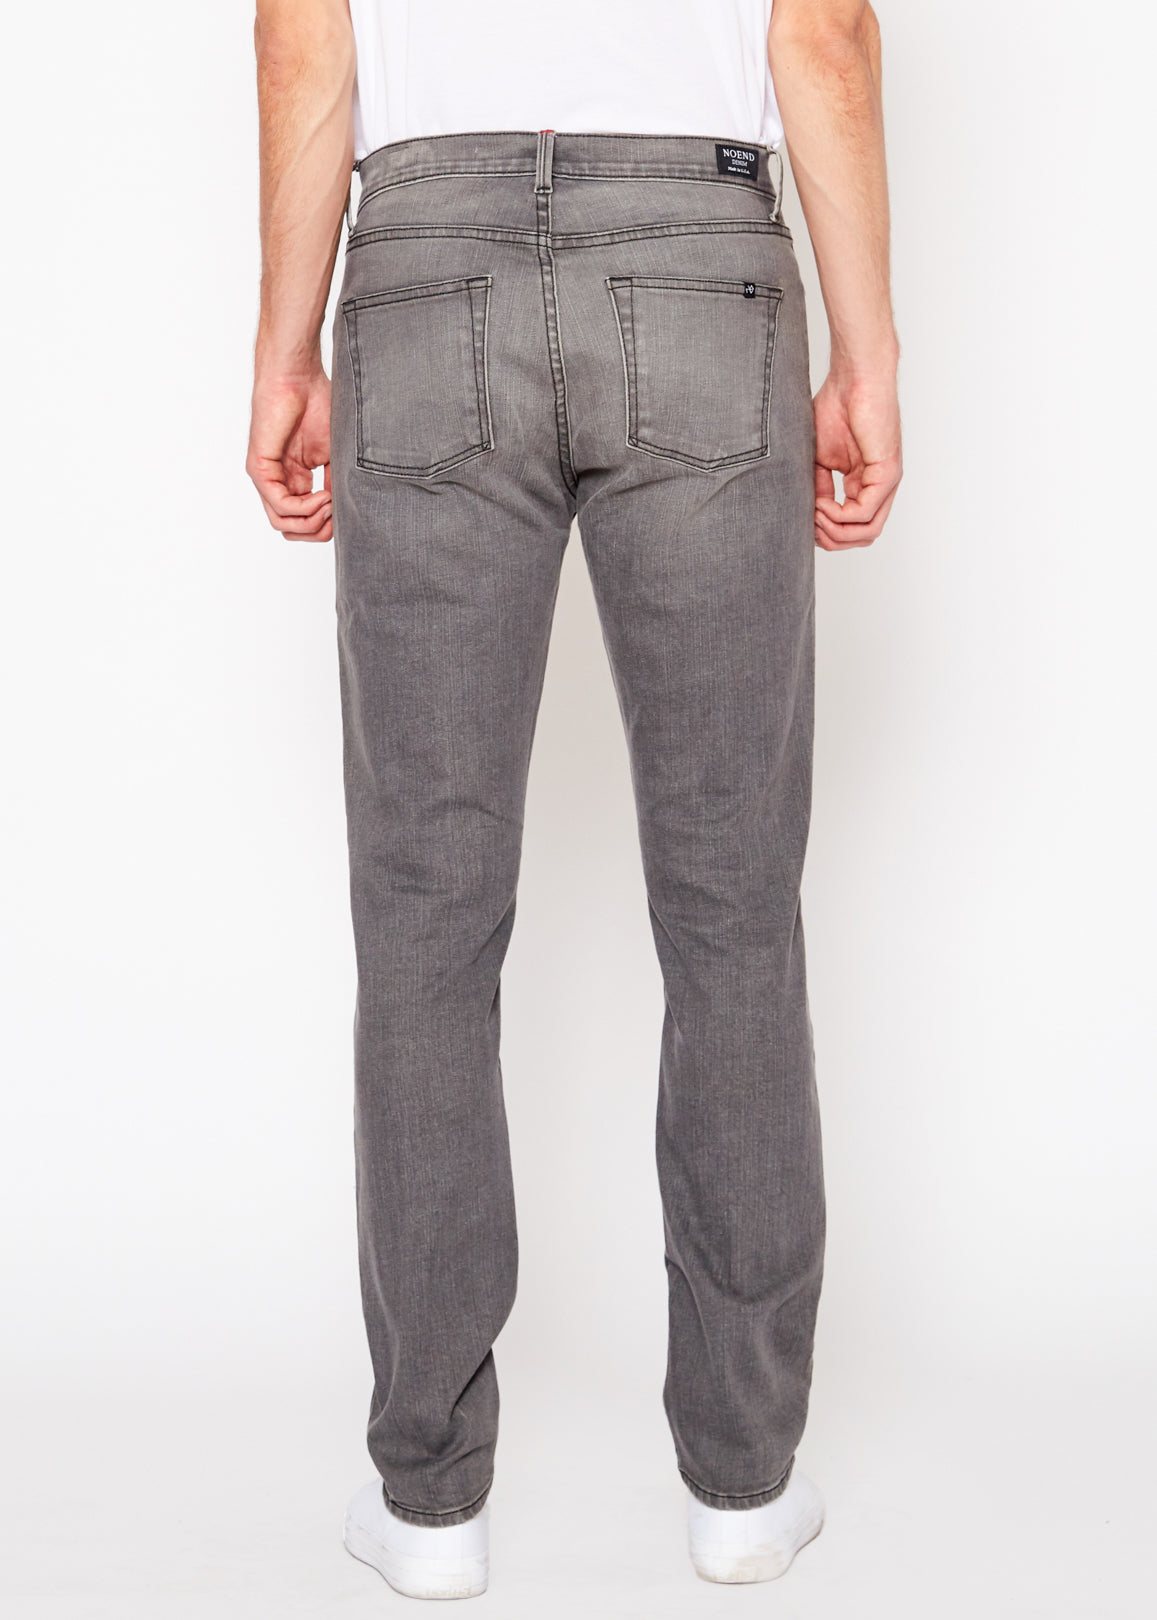 Men's 30 inseam Brooklyn Stretch Slim Fit Jeans In Washed Grey - Noend Denim